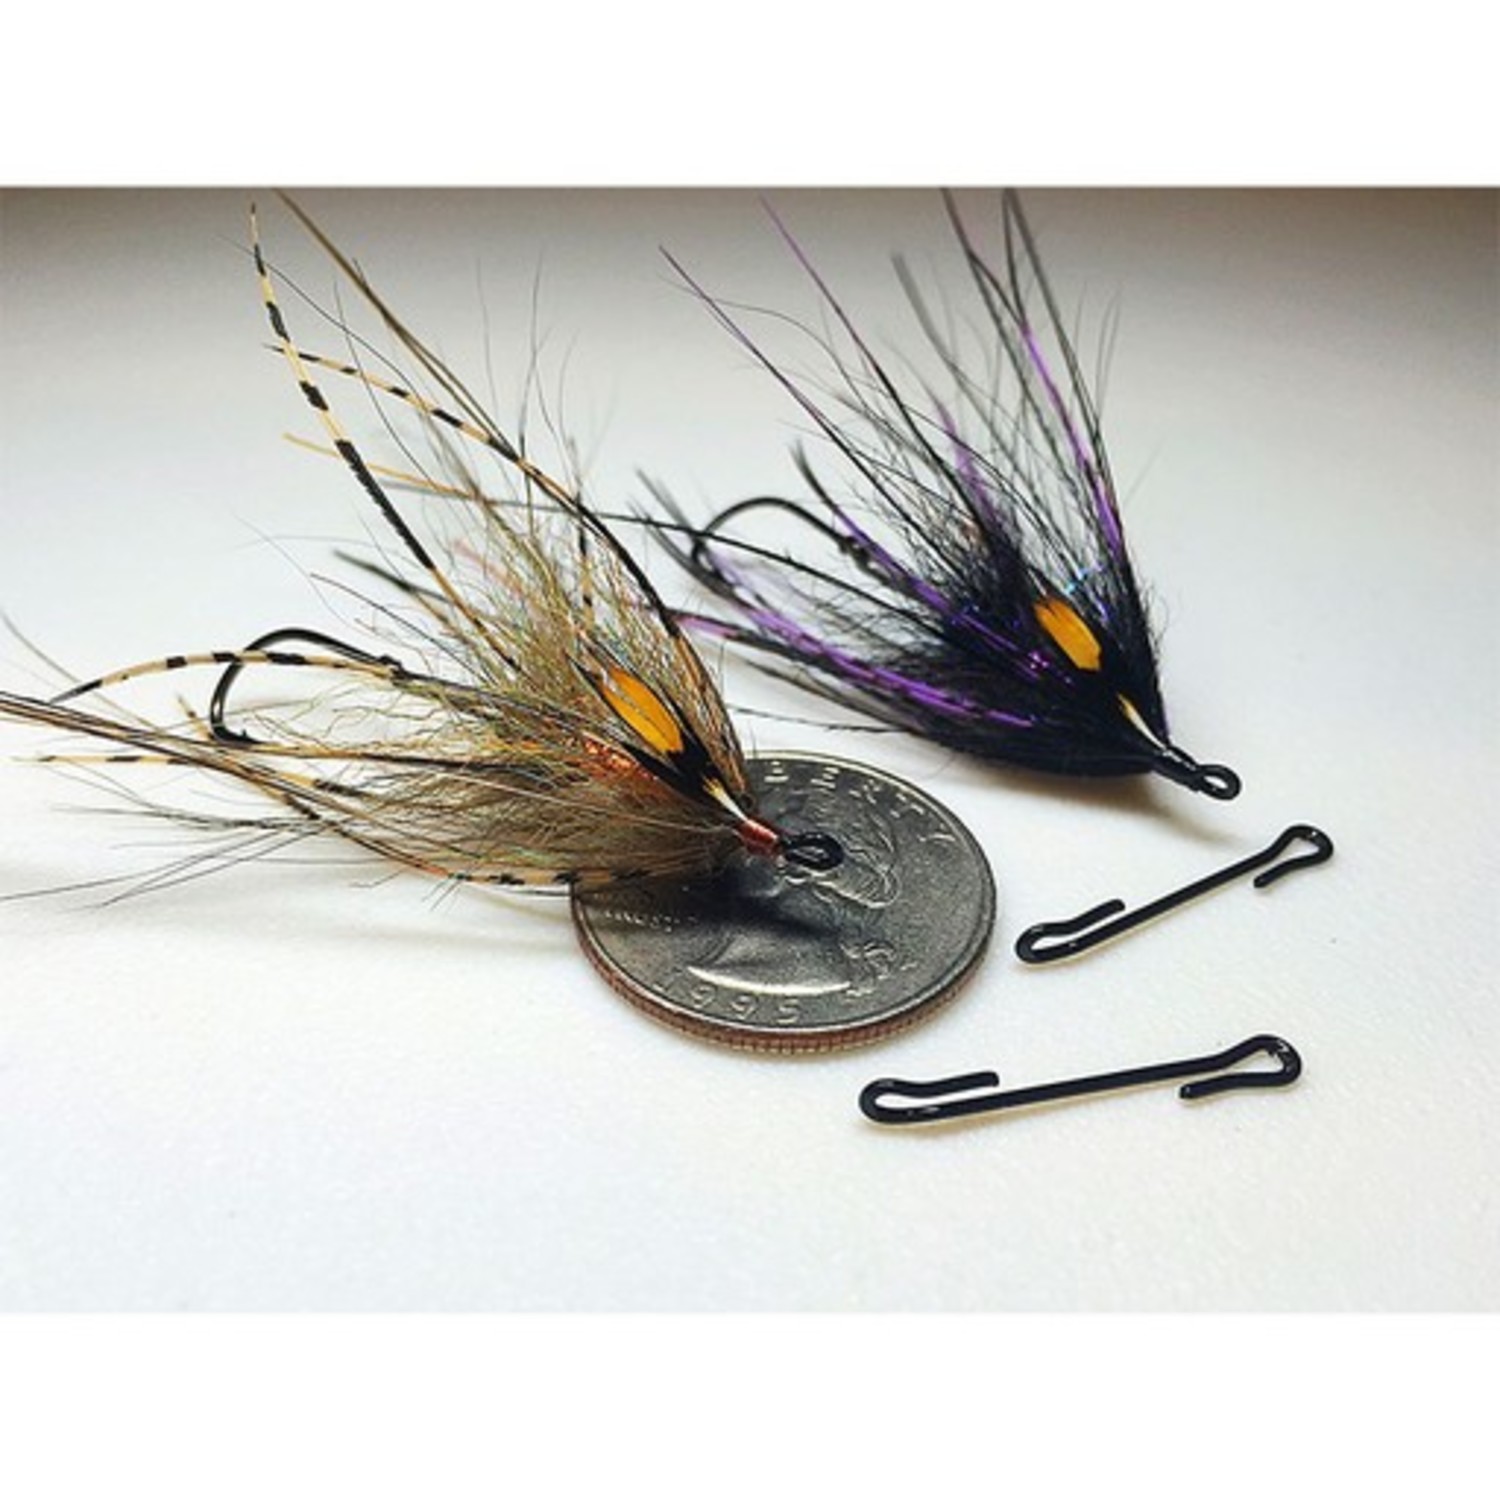 Hareline Senyo's Micro Trout Shanks - Royal Treatment Fly Fishing